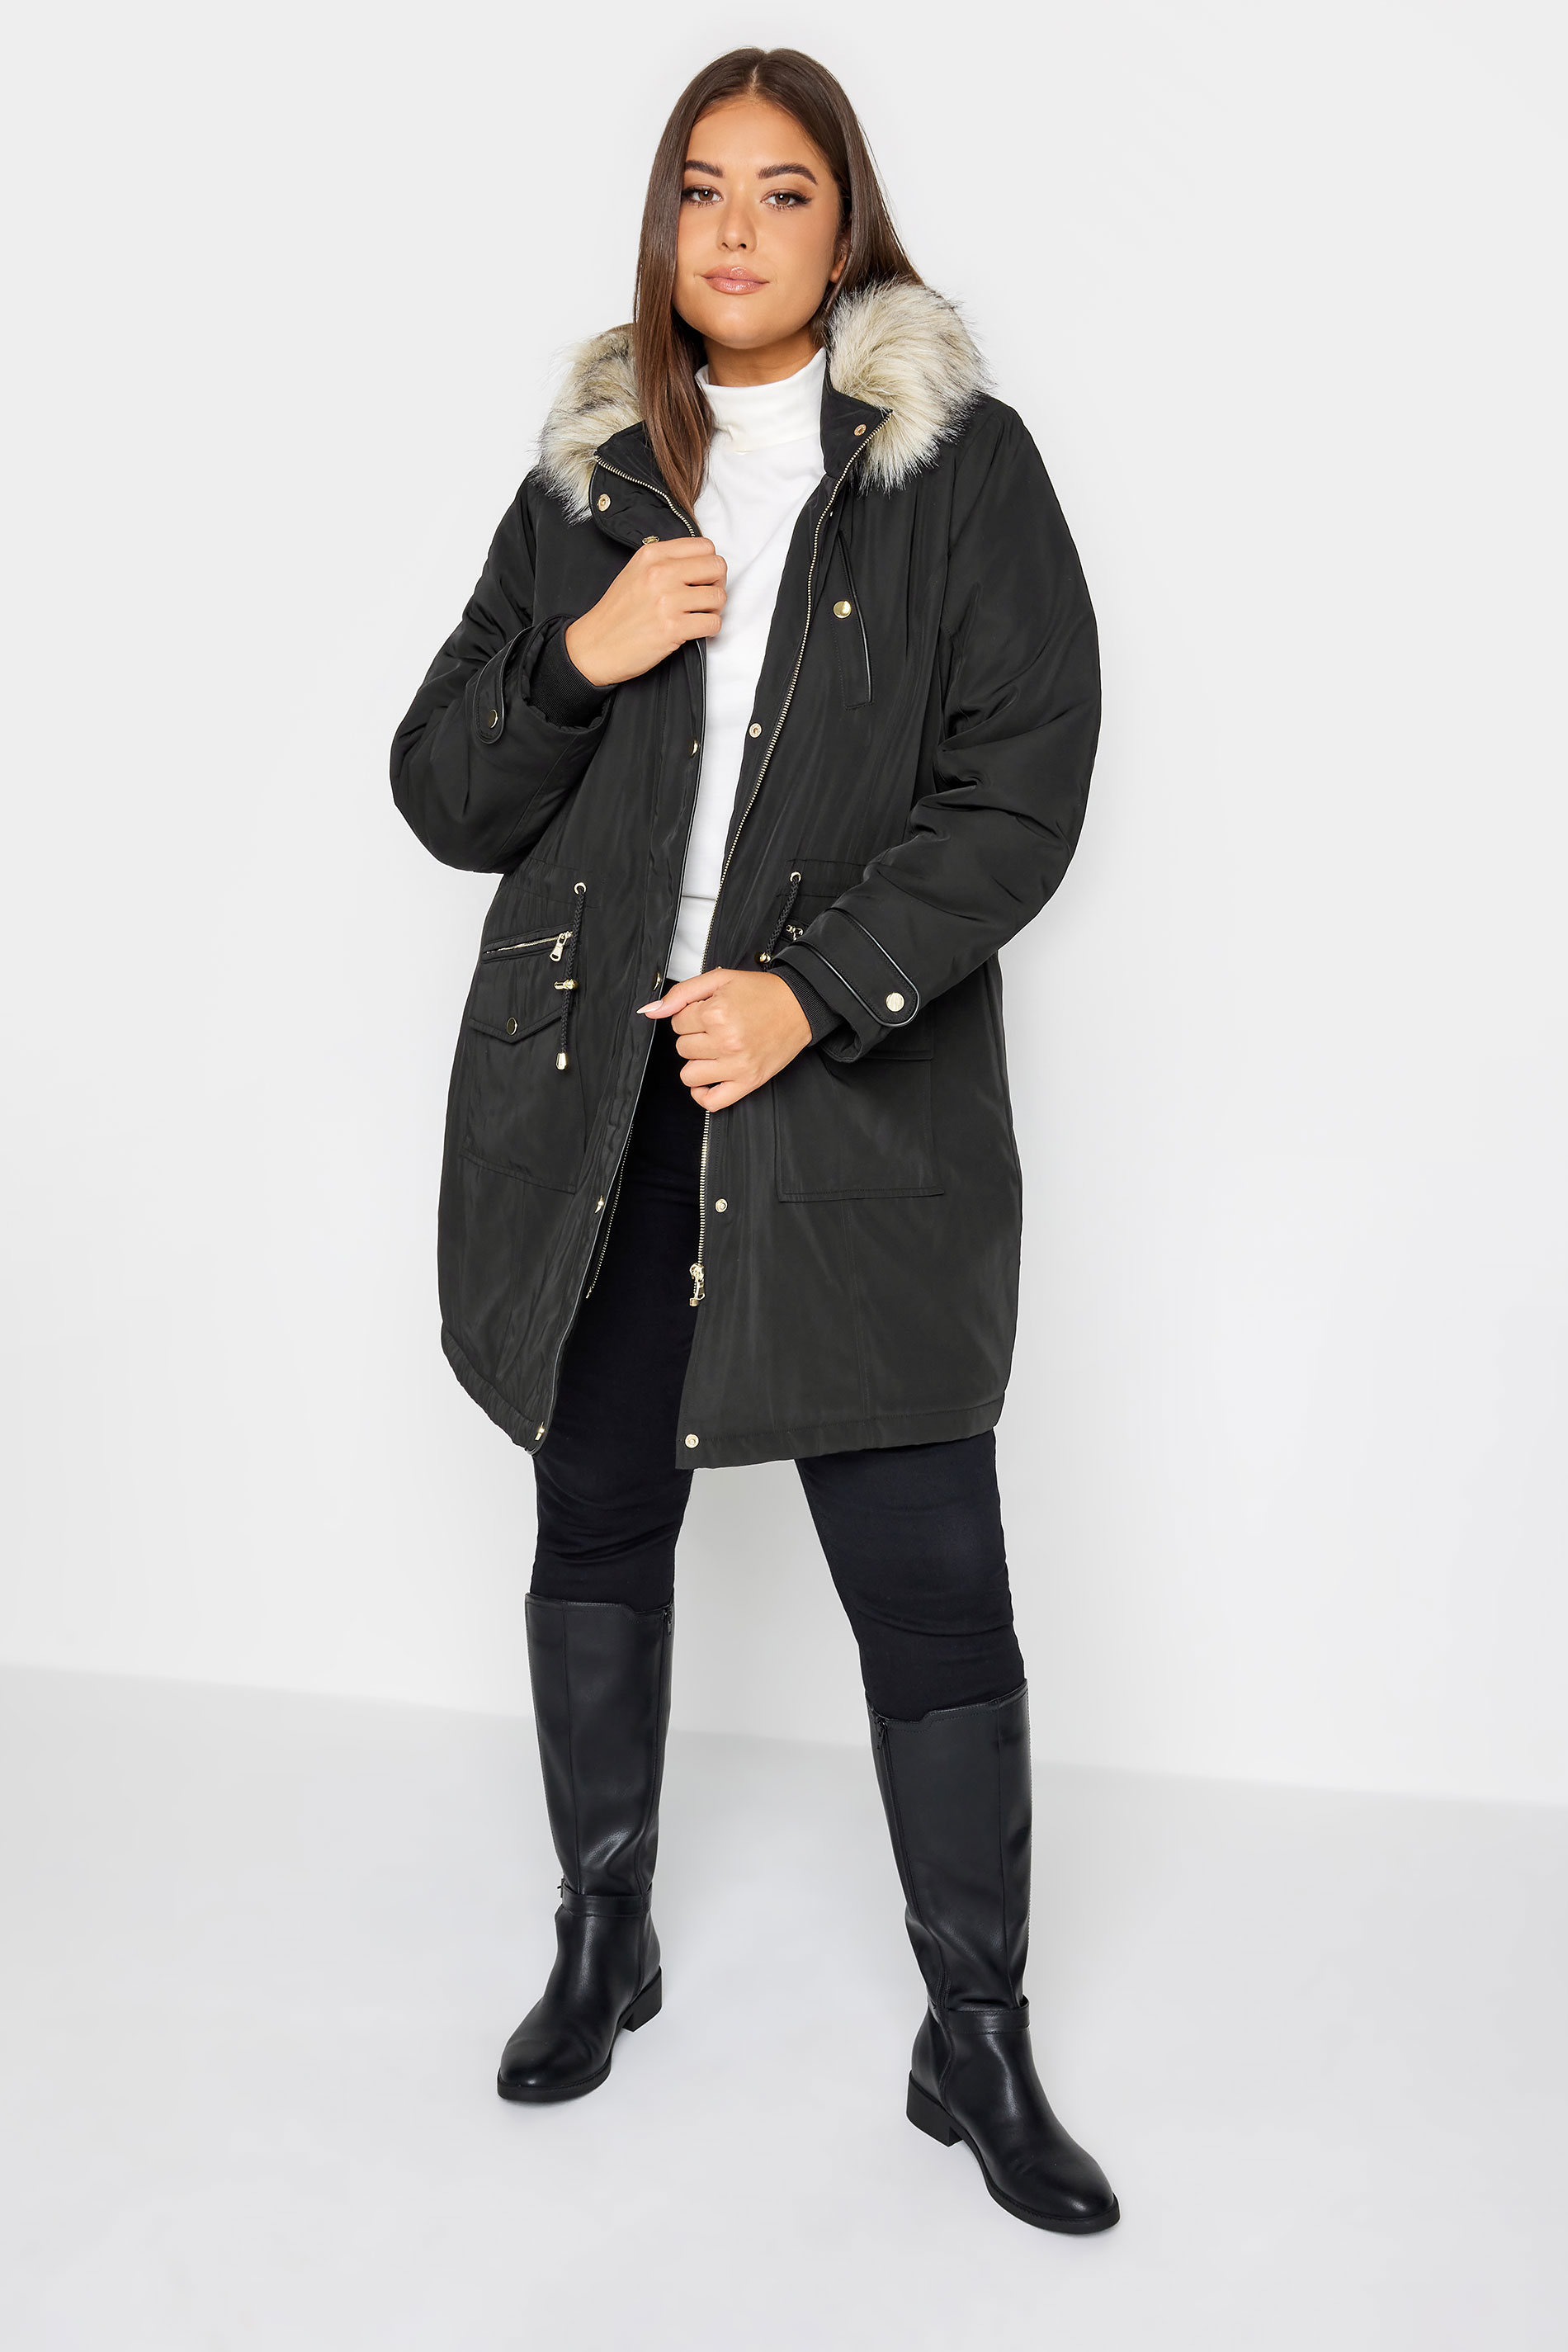 YOURS Plus Size Black Faux Fur Trim Hooded Parka Coat | Yours Clothing 2